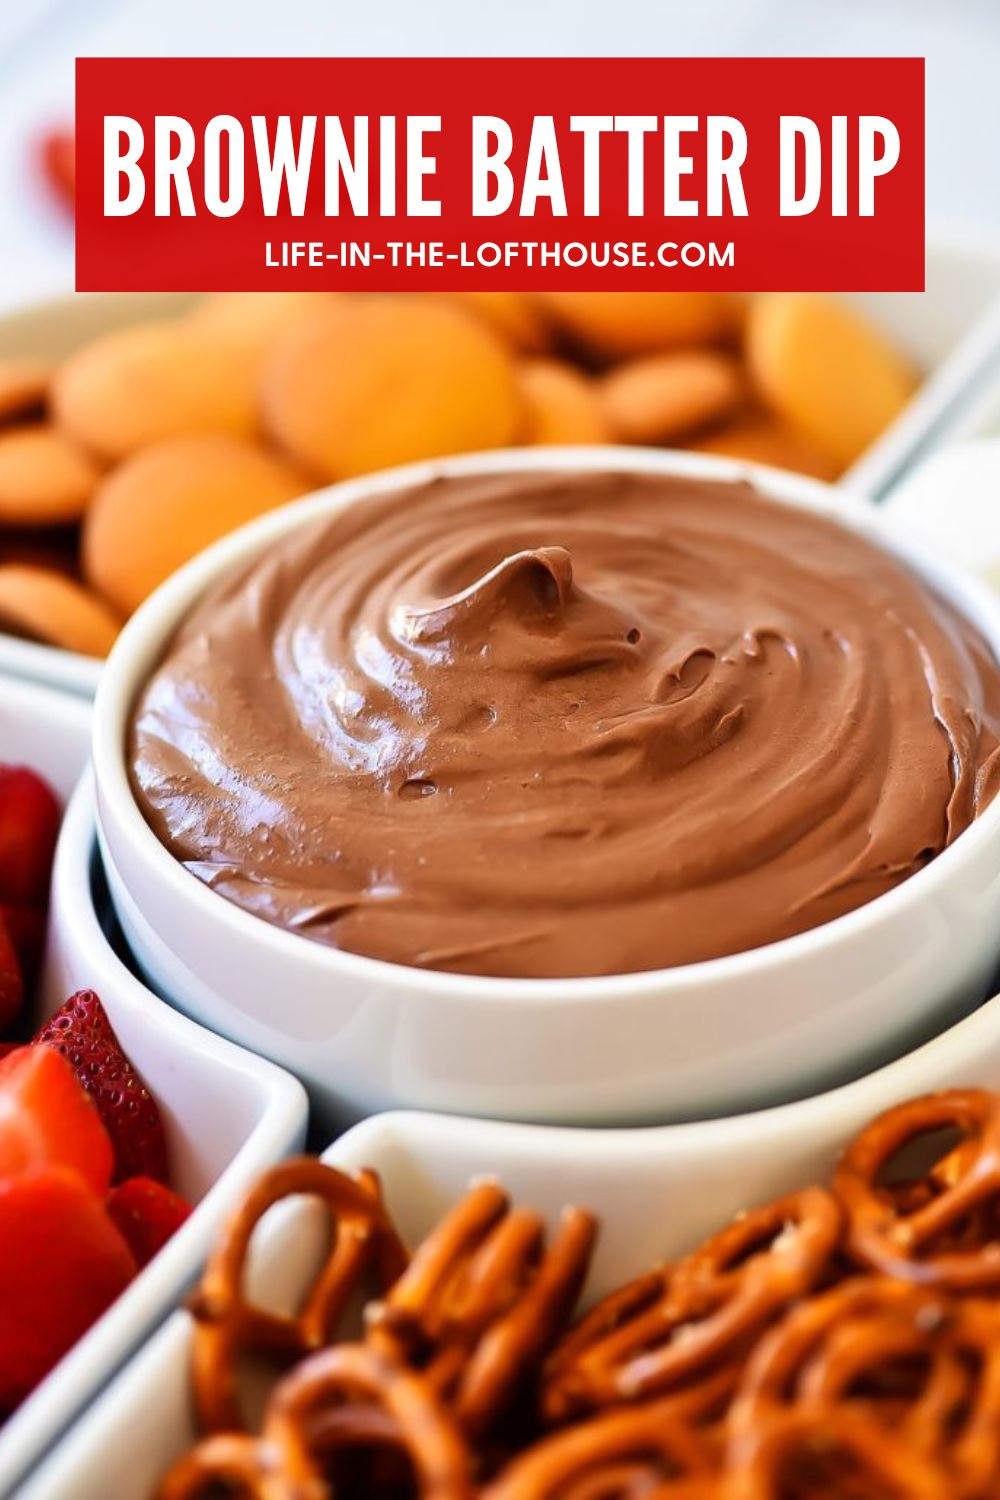 Brownie Batter Dip is an egg-free creamy chocolate dip that tastes just like brownie batter!